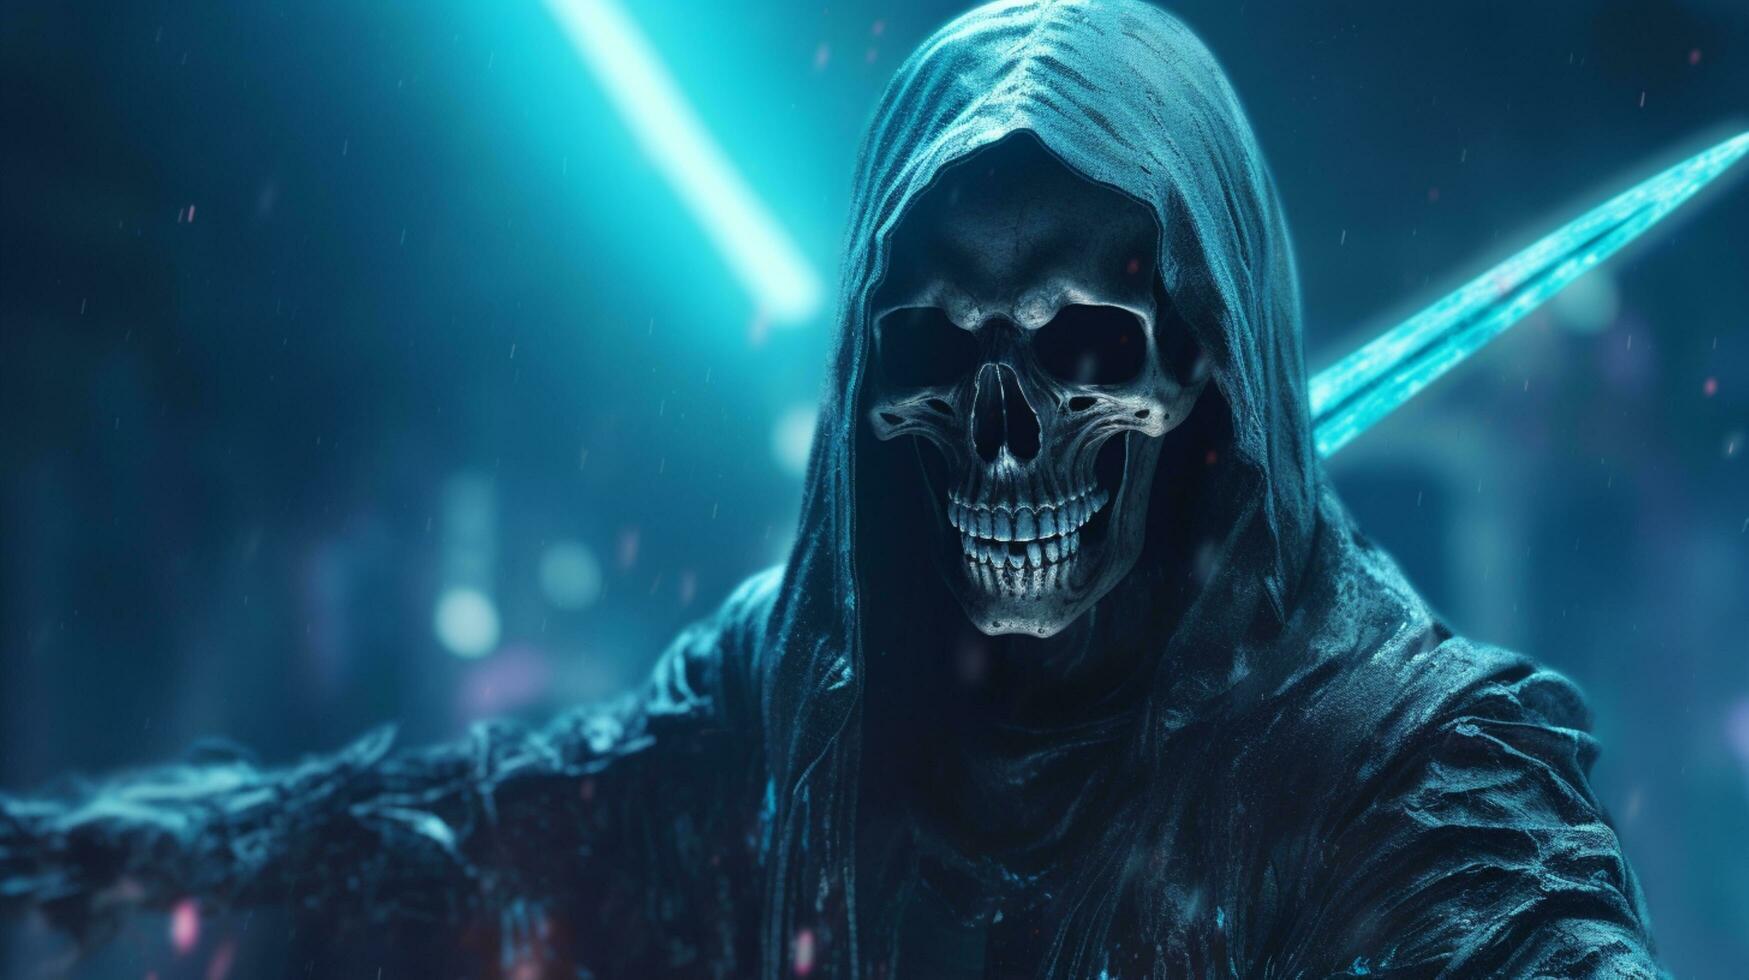 grim reaper with cyberpunk design illustration photo